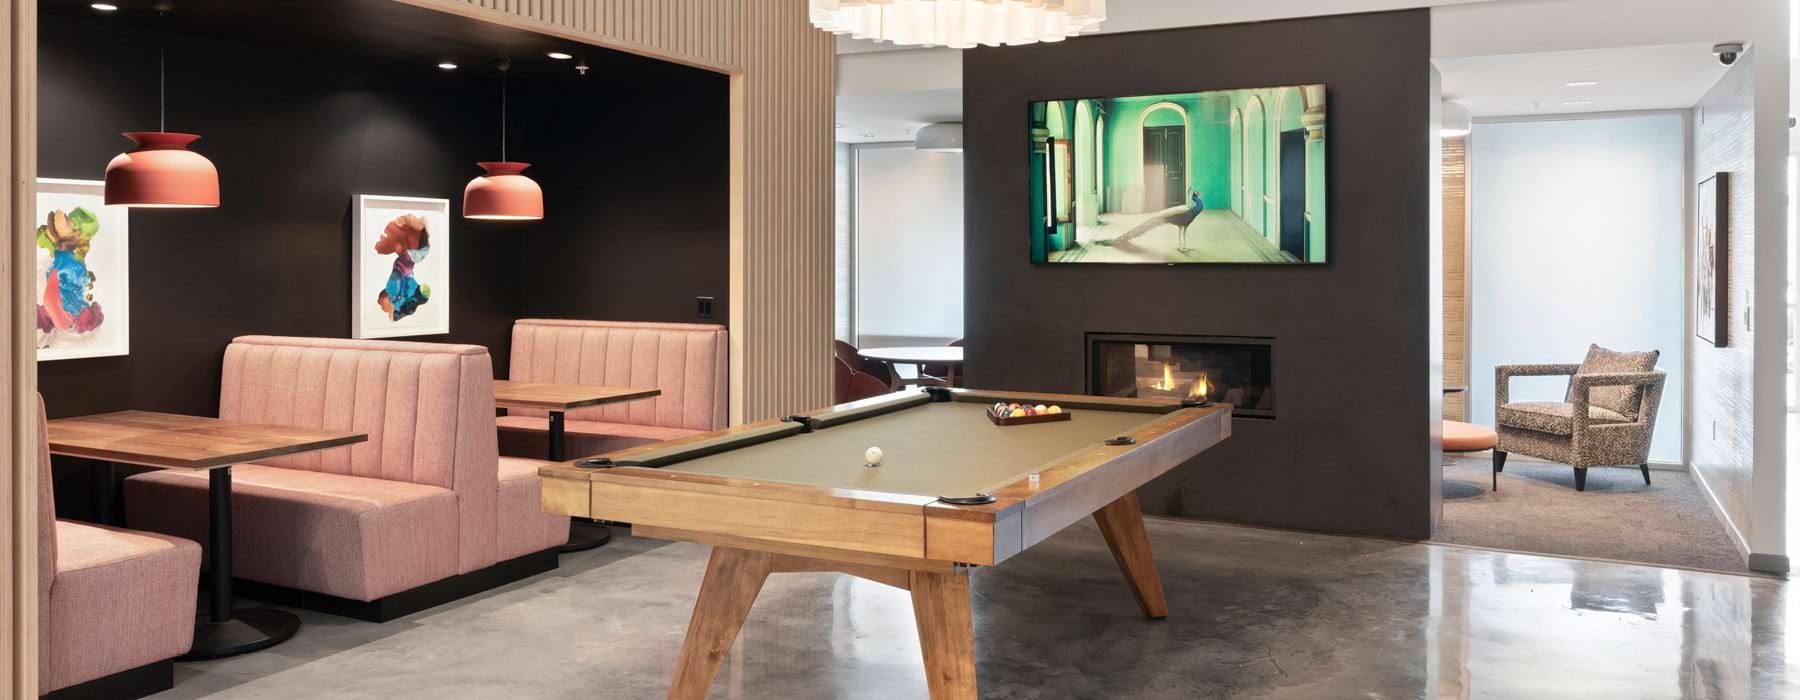 Gameroom with billiards lounge